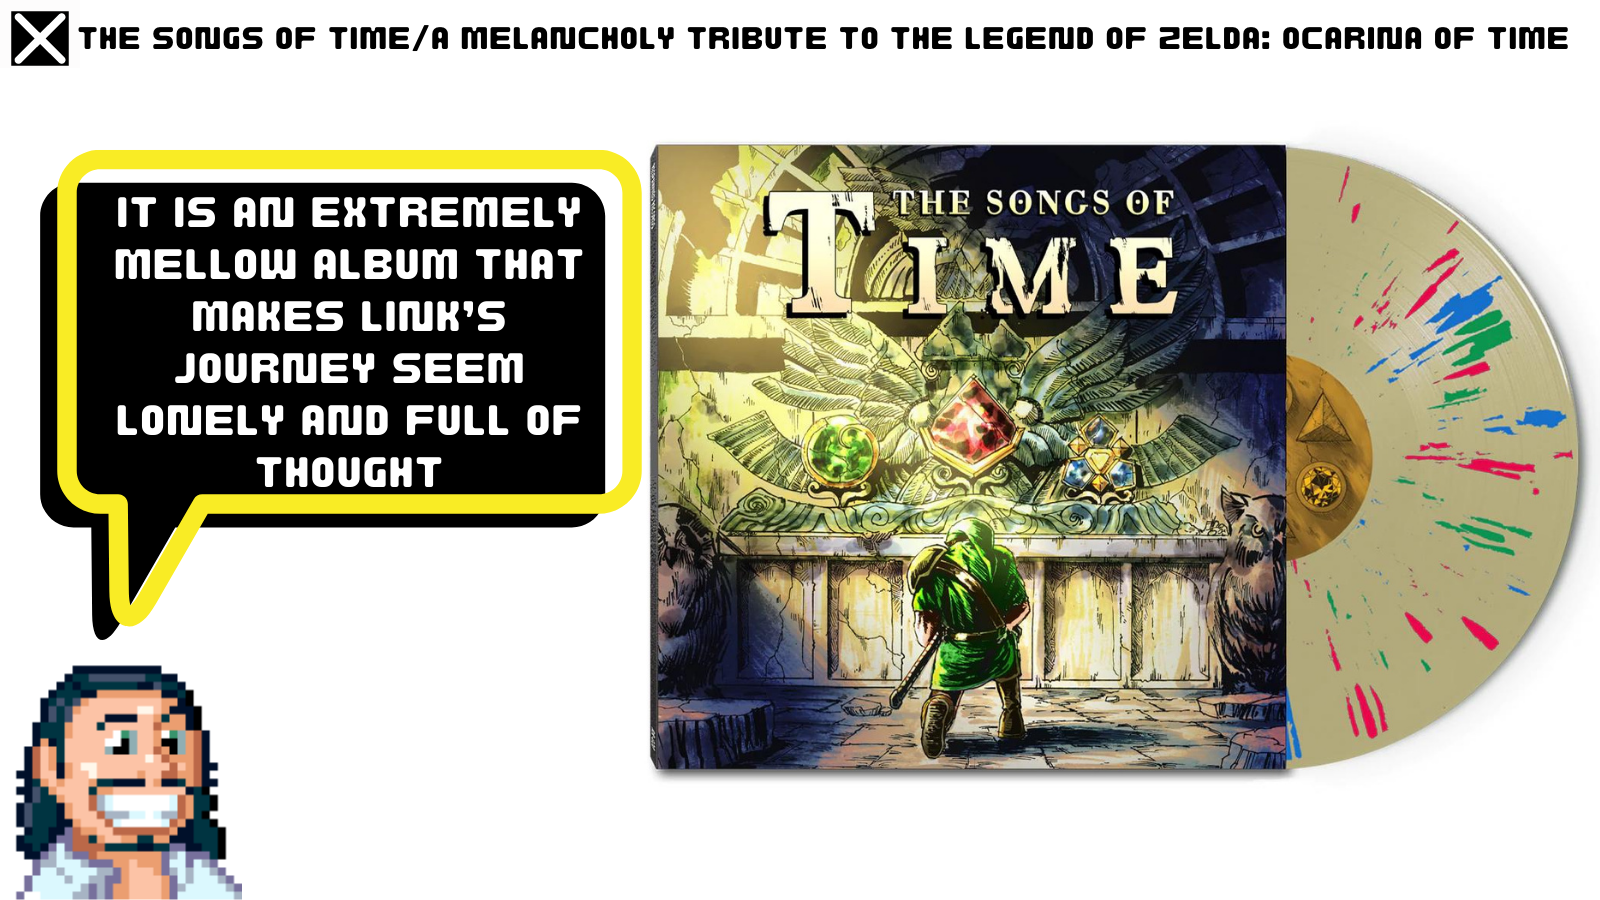 The Legend of Zelda: Ocarina of Time: A Game Music Companion